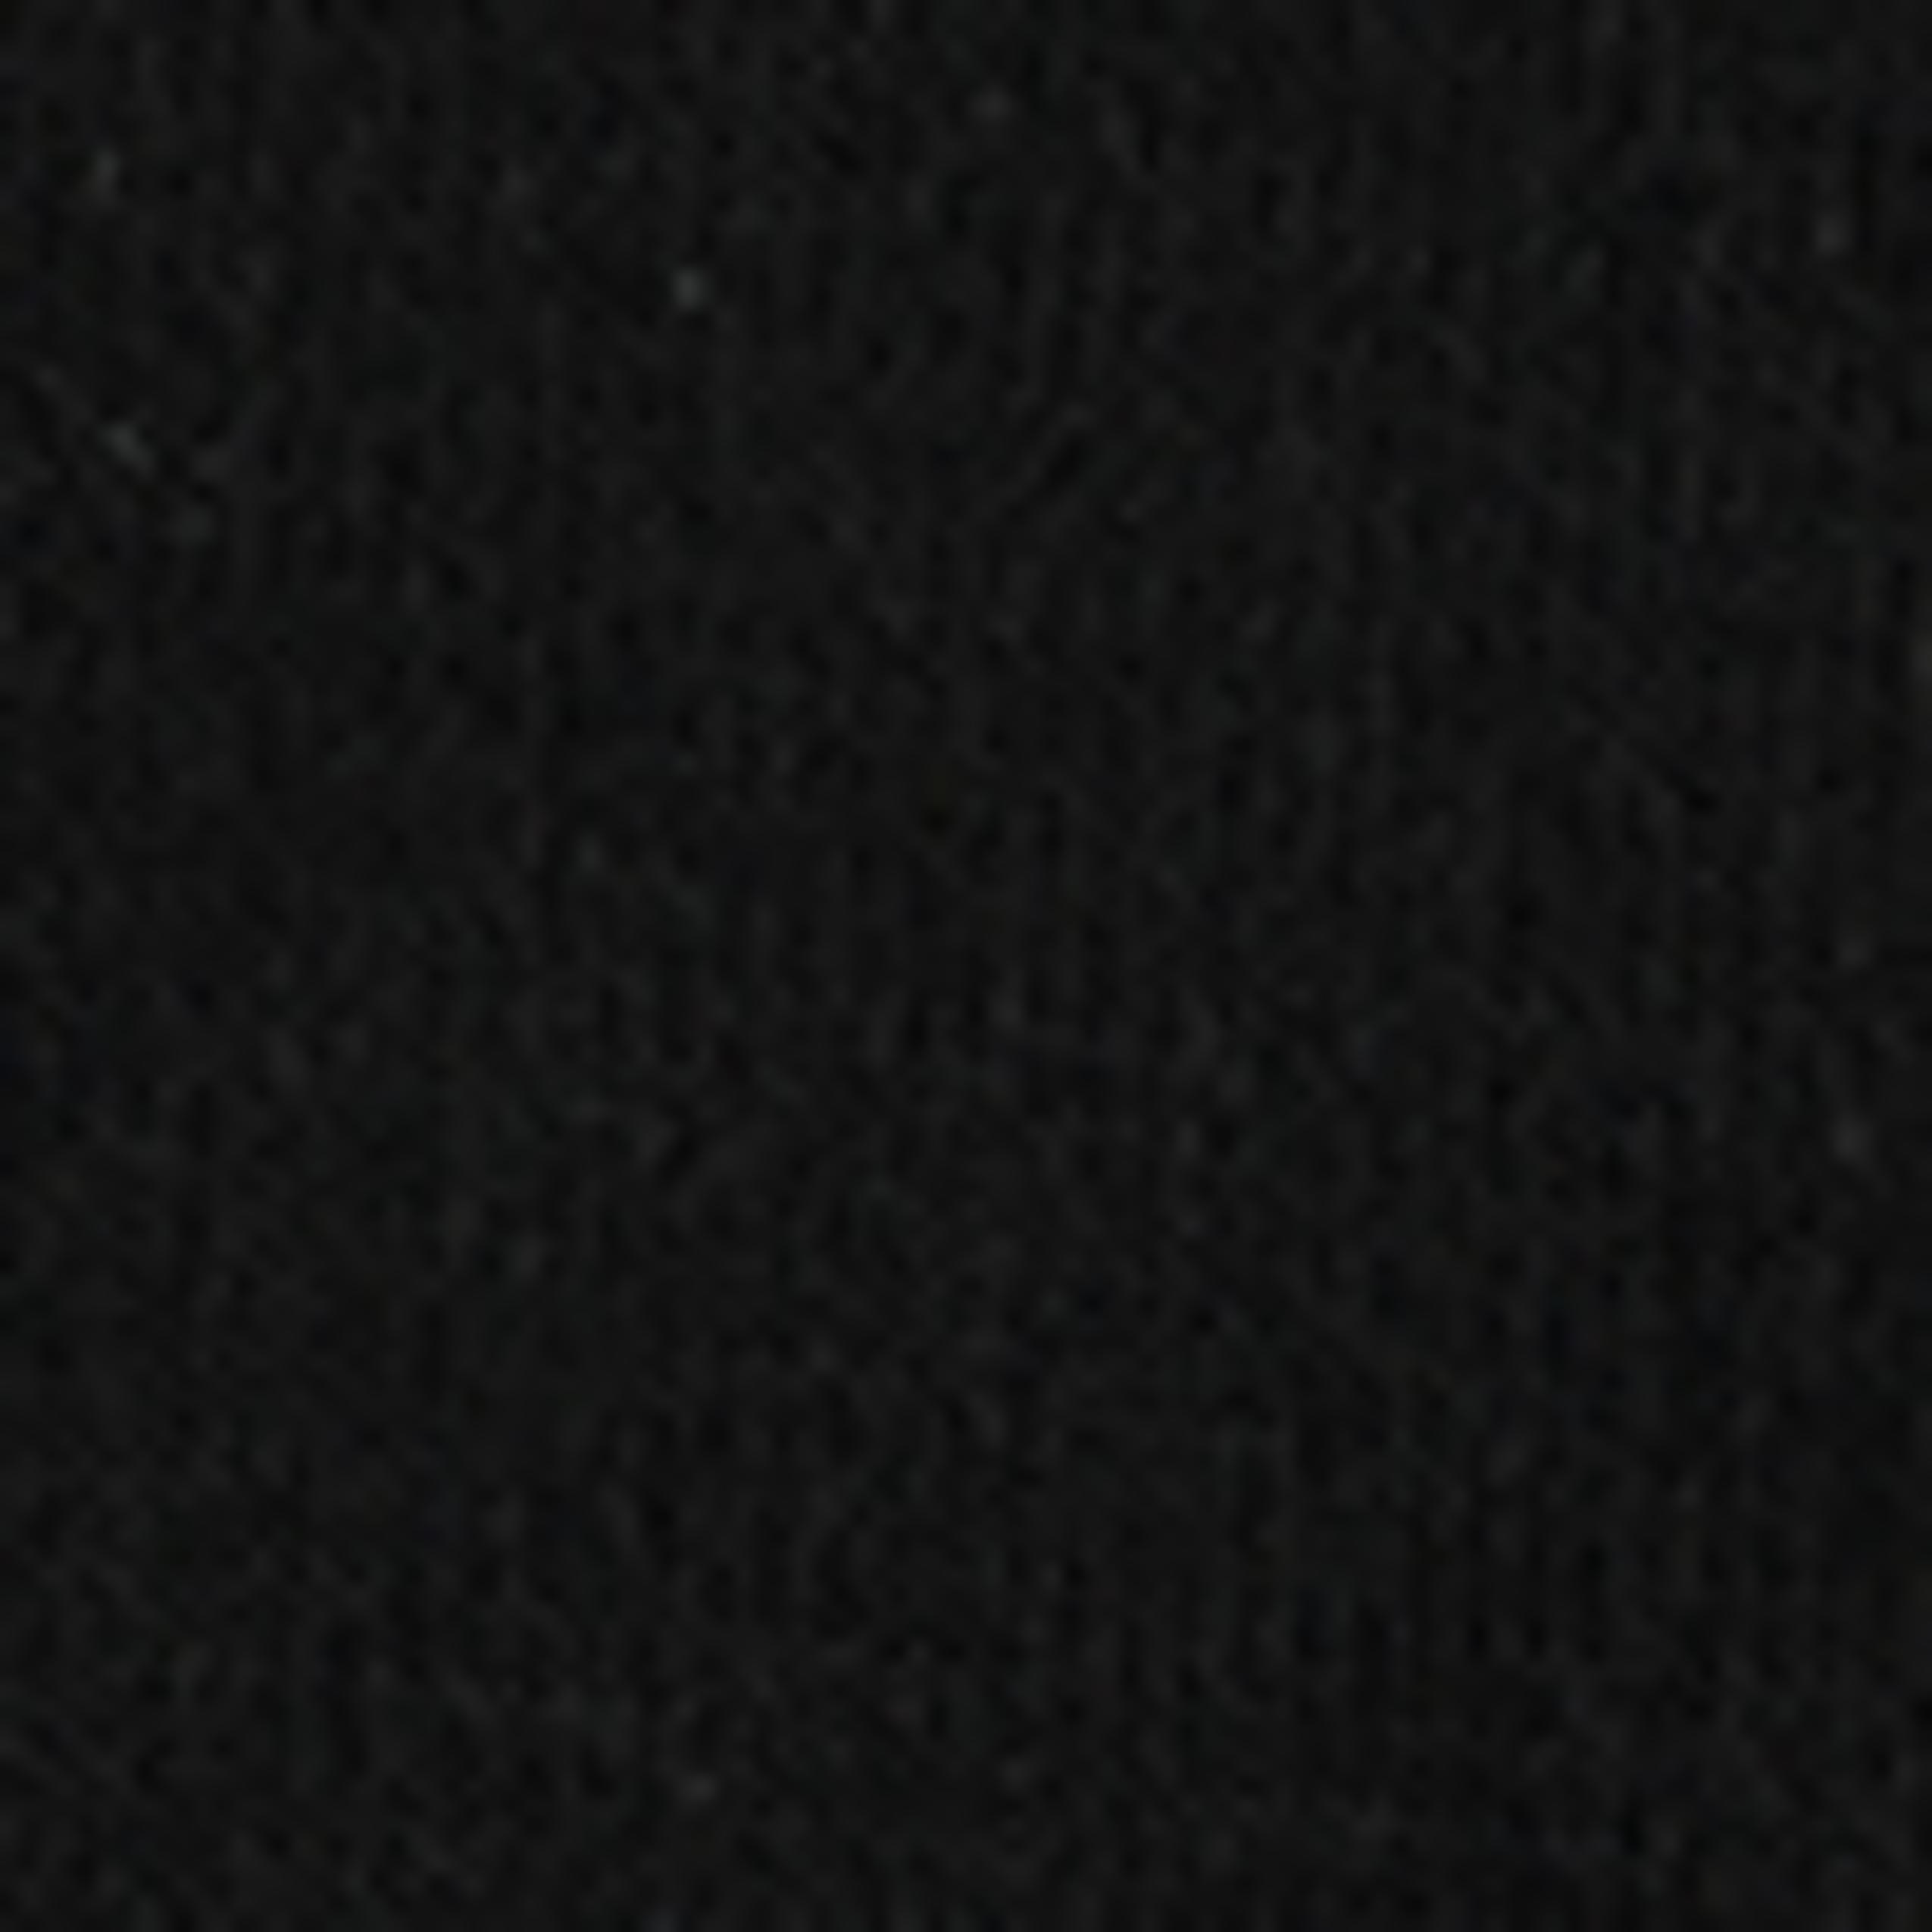 Tezenis - Black Lightweight Long Cotton Socks, Set Of 3